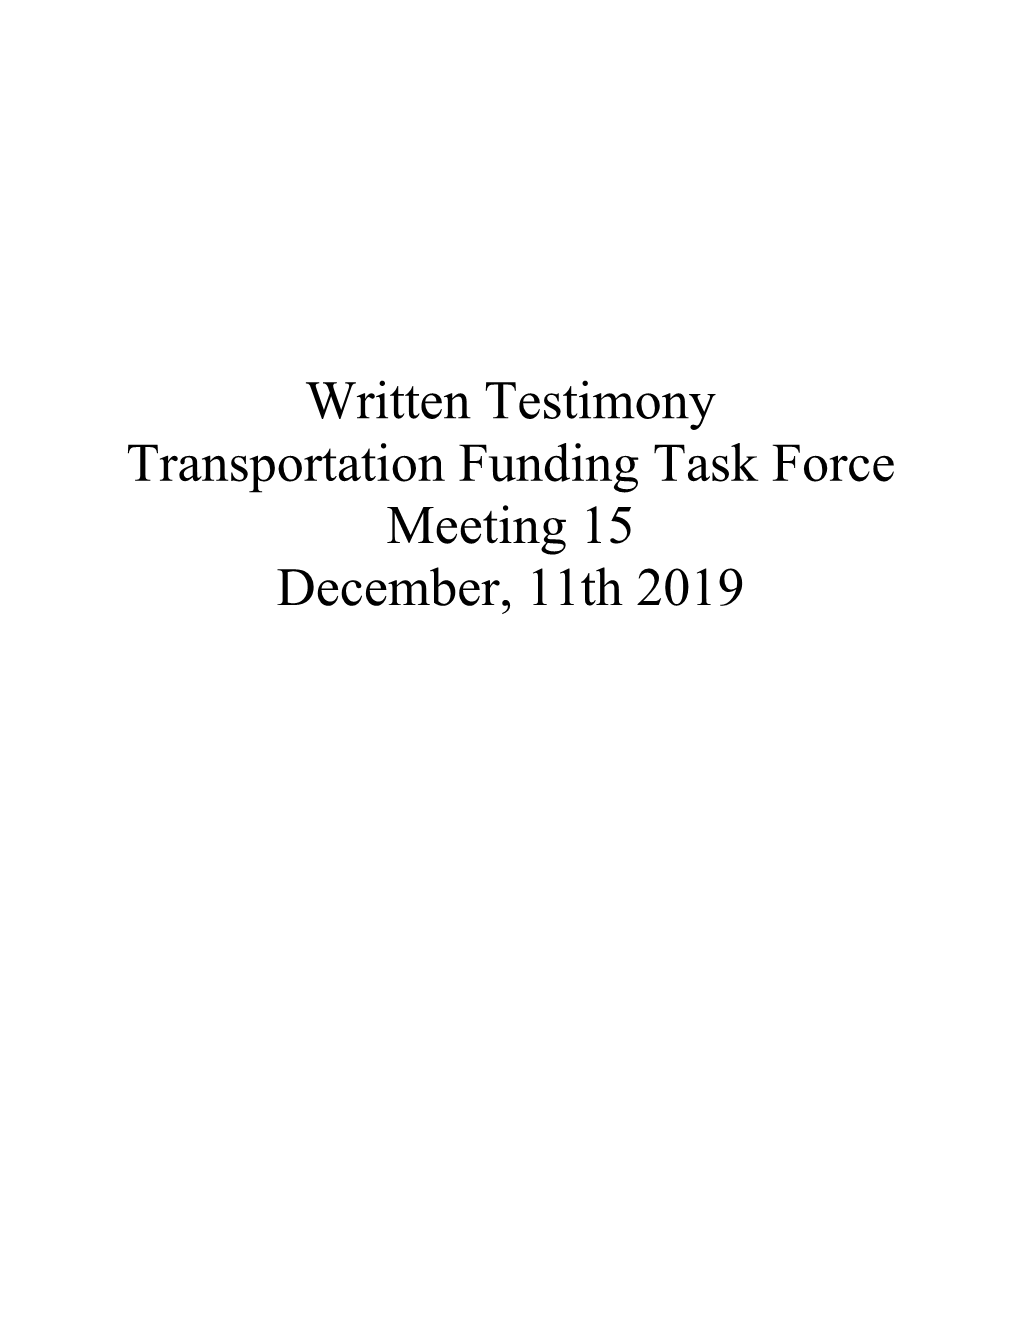 Written Testimony Transportation Funding Task Force Meeting 15 December, 11Th 2019